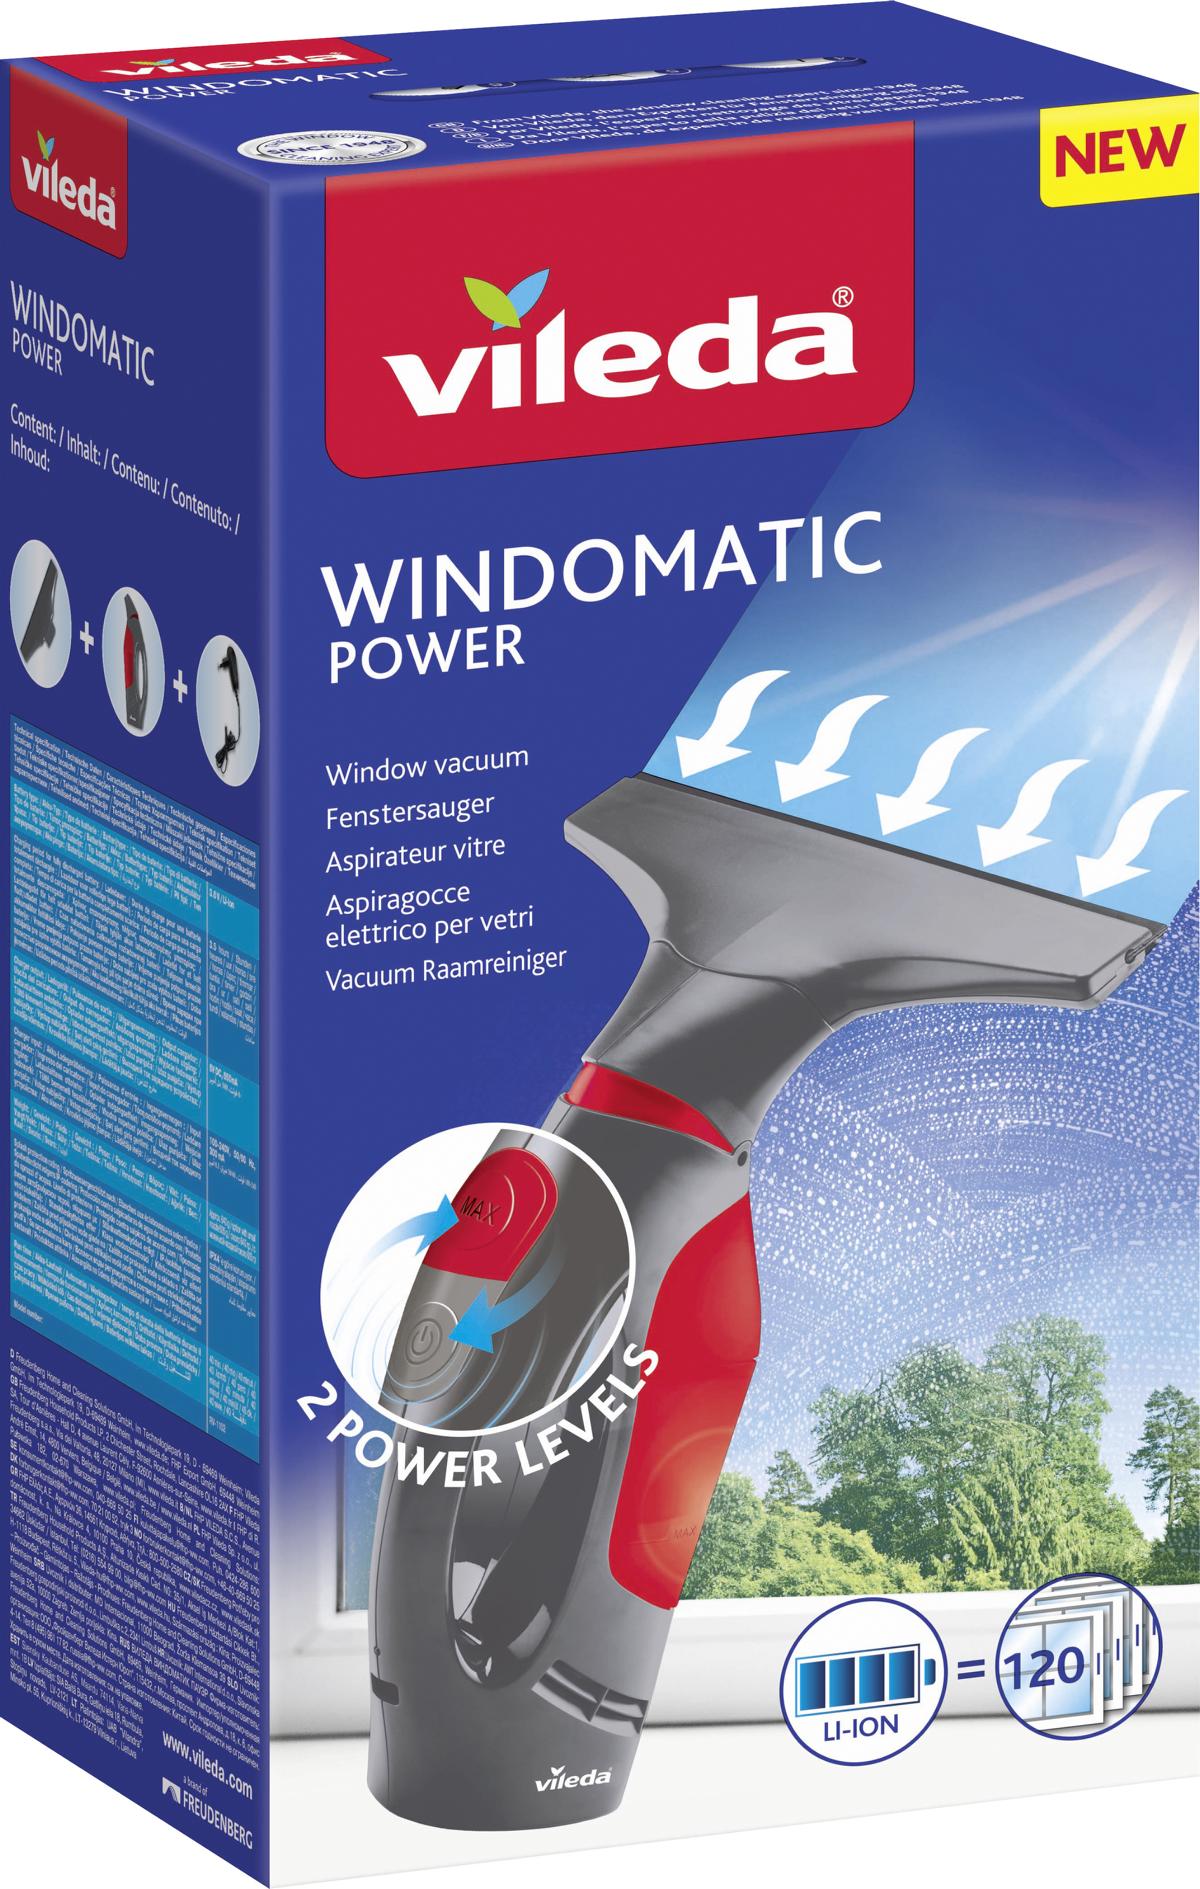 VILEDA FENSTERSAUGER WINDOWMATIC POWER